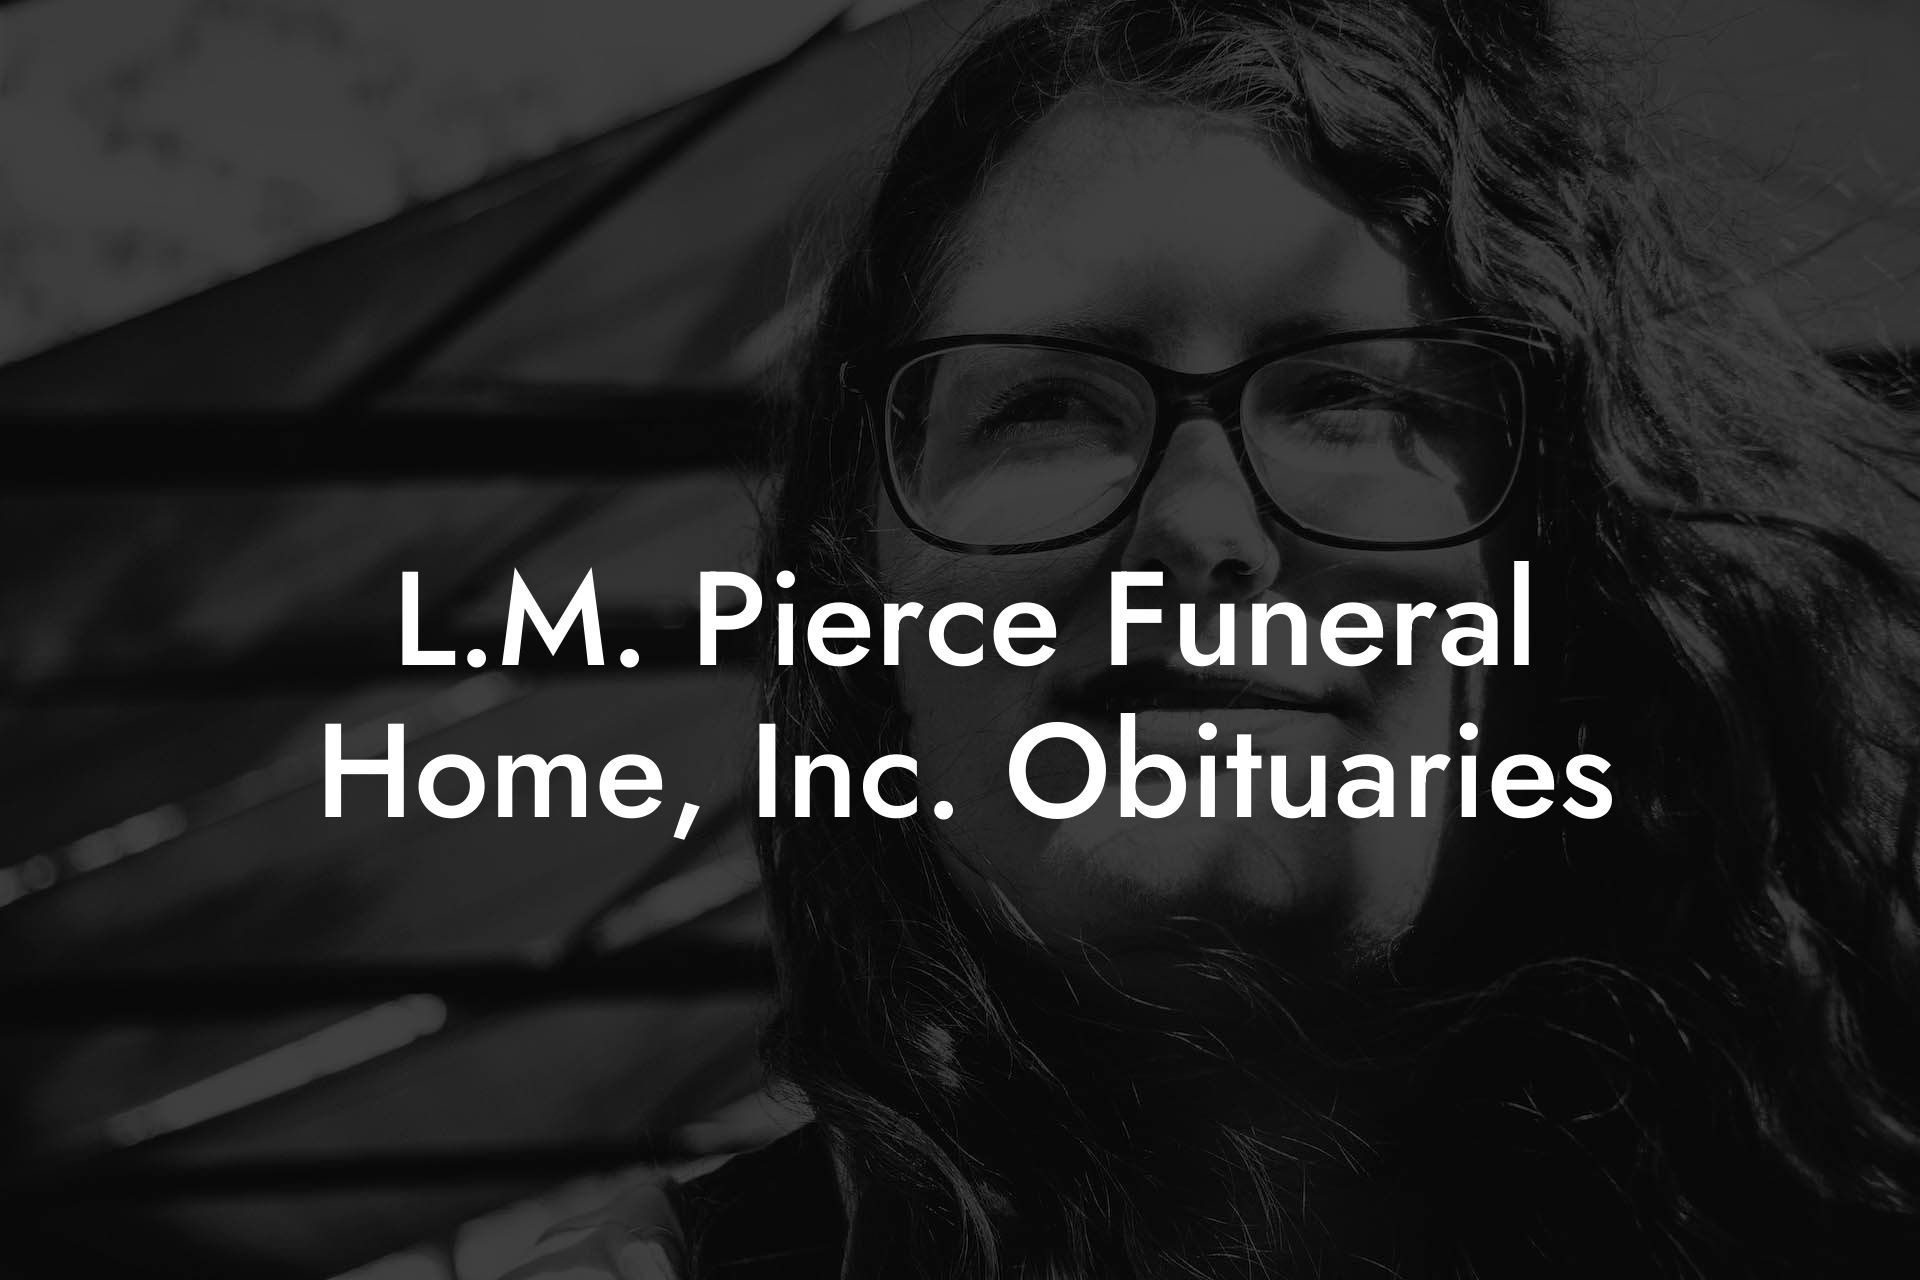 L.M. Pierce Funeral Home, Inc. Obituaries